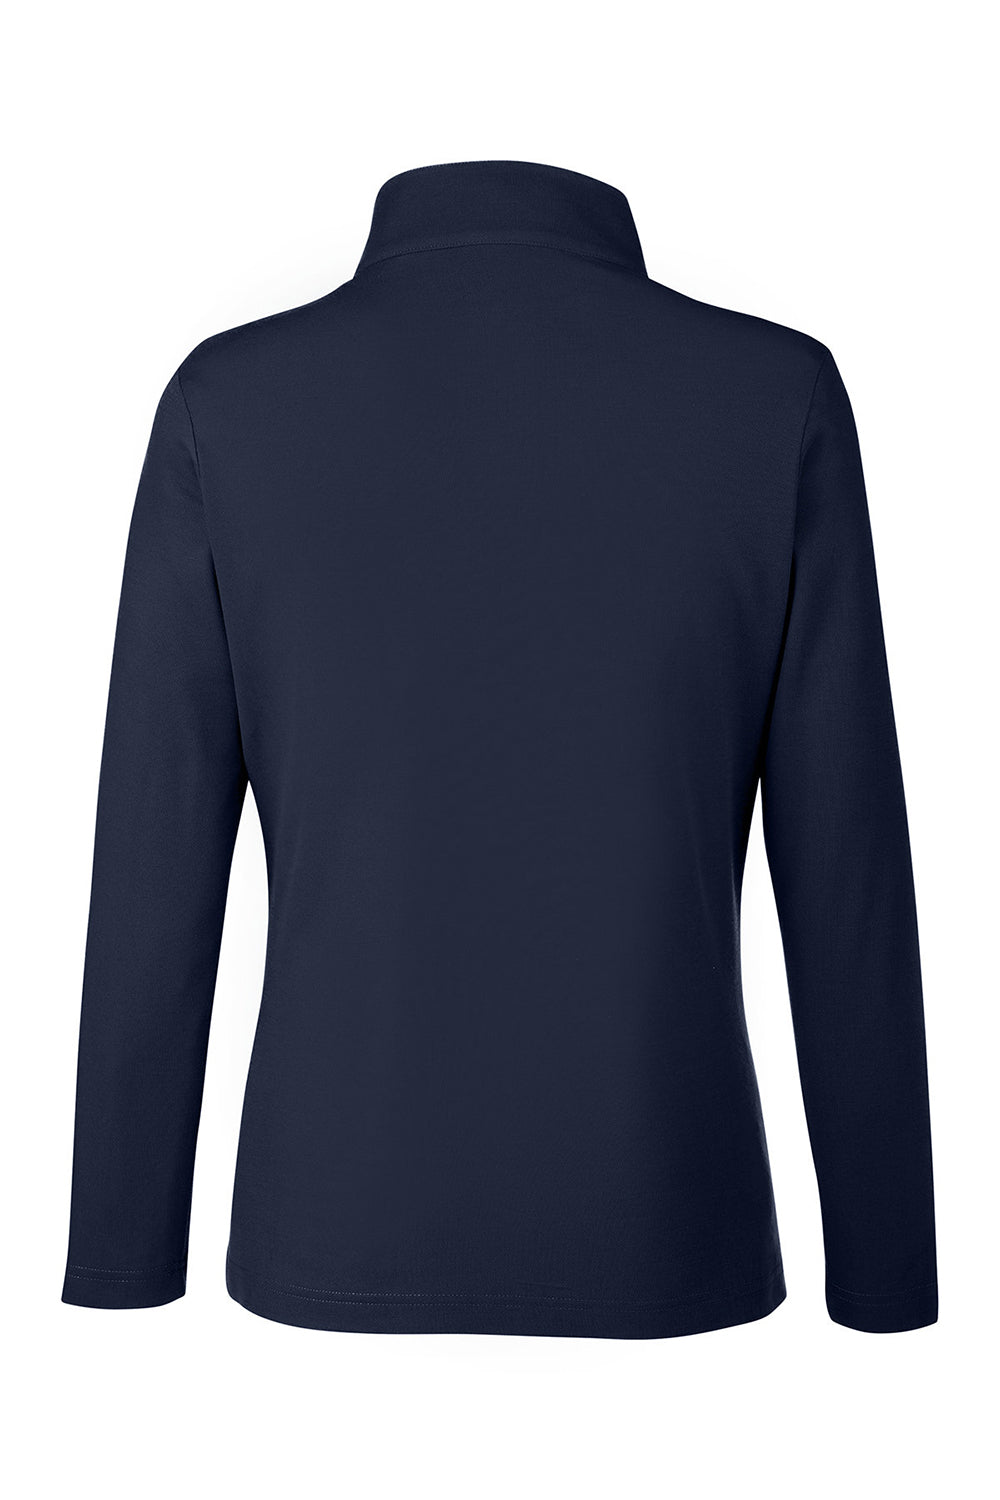 Core 365 CE405W Womens Fusion ChromaSoft Performance Moisture Wicking Pique 1/4 Zip Sweatshirt Classic Navy Blue Flat Back